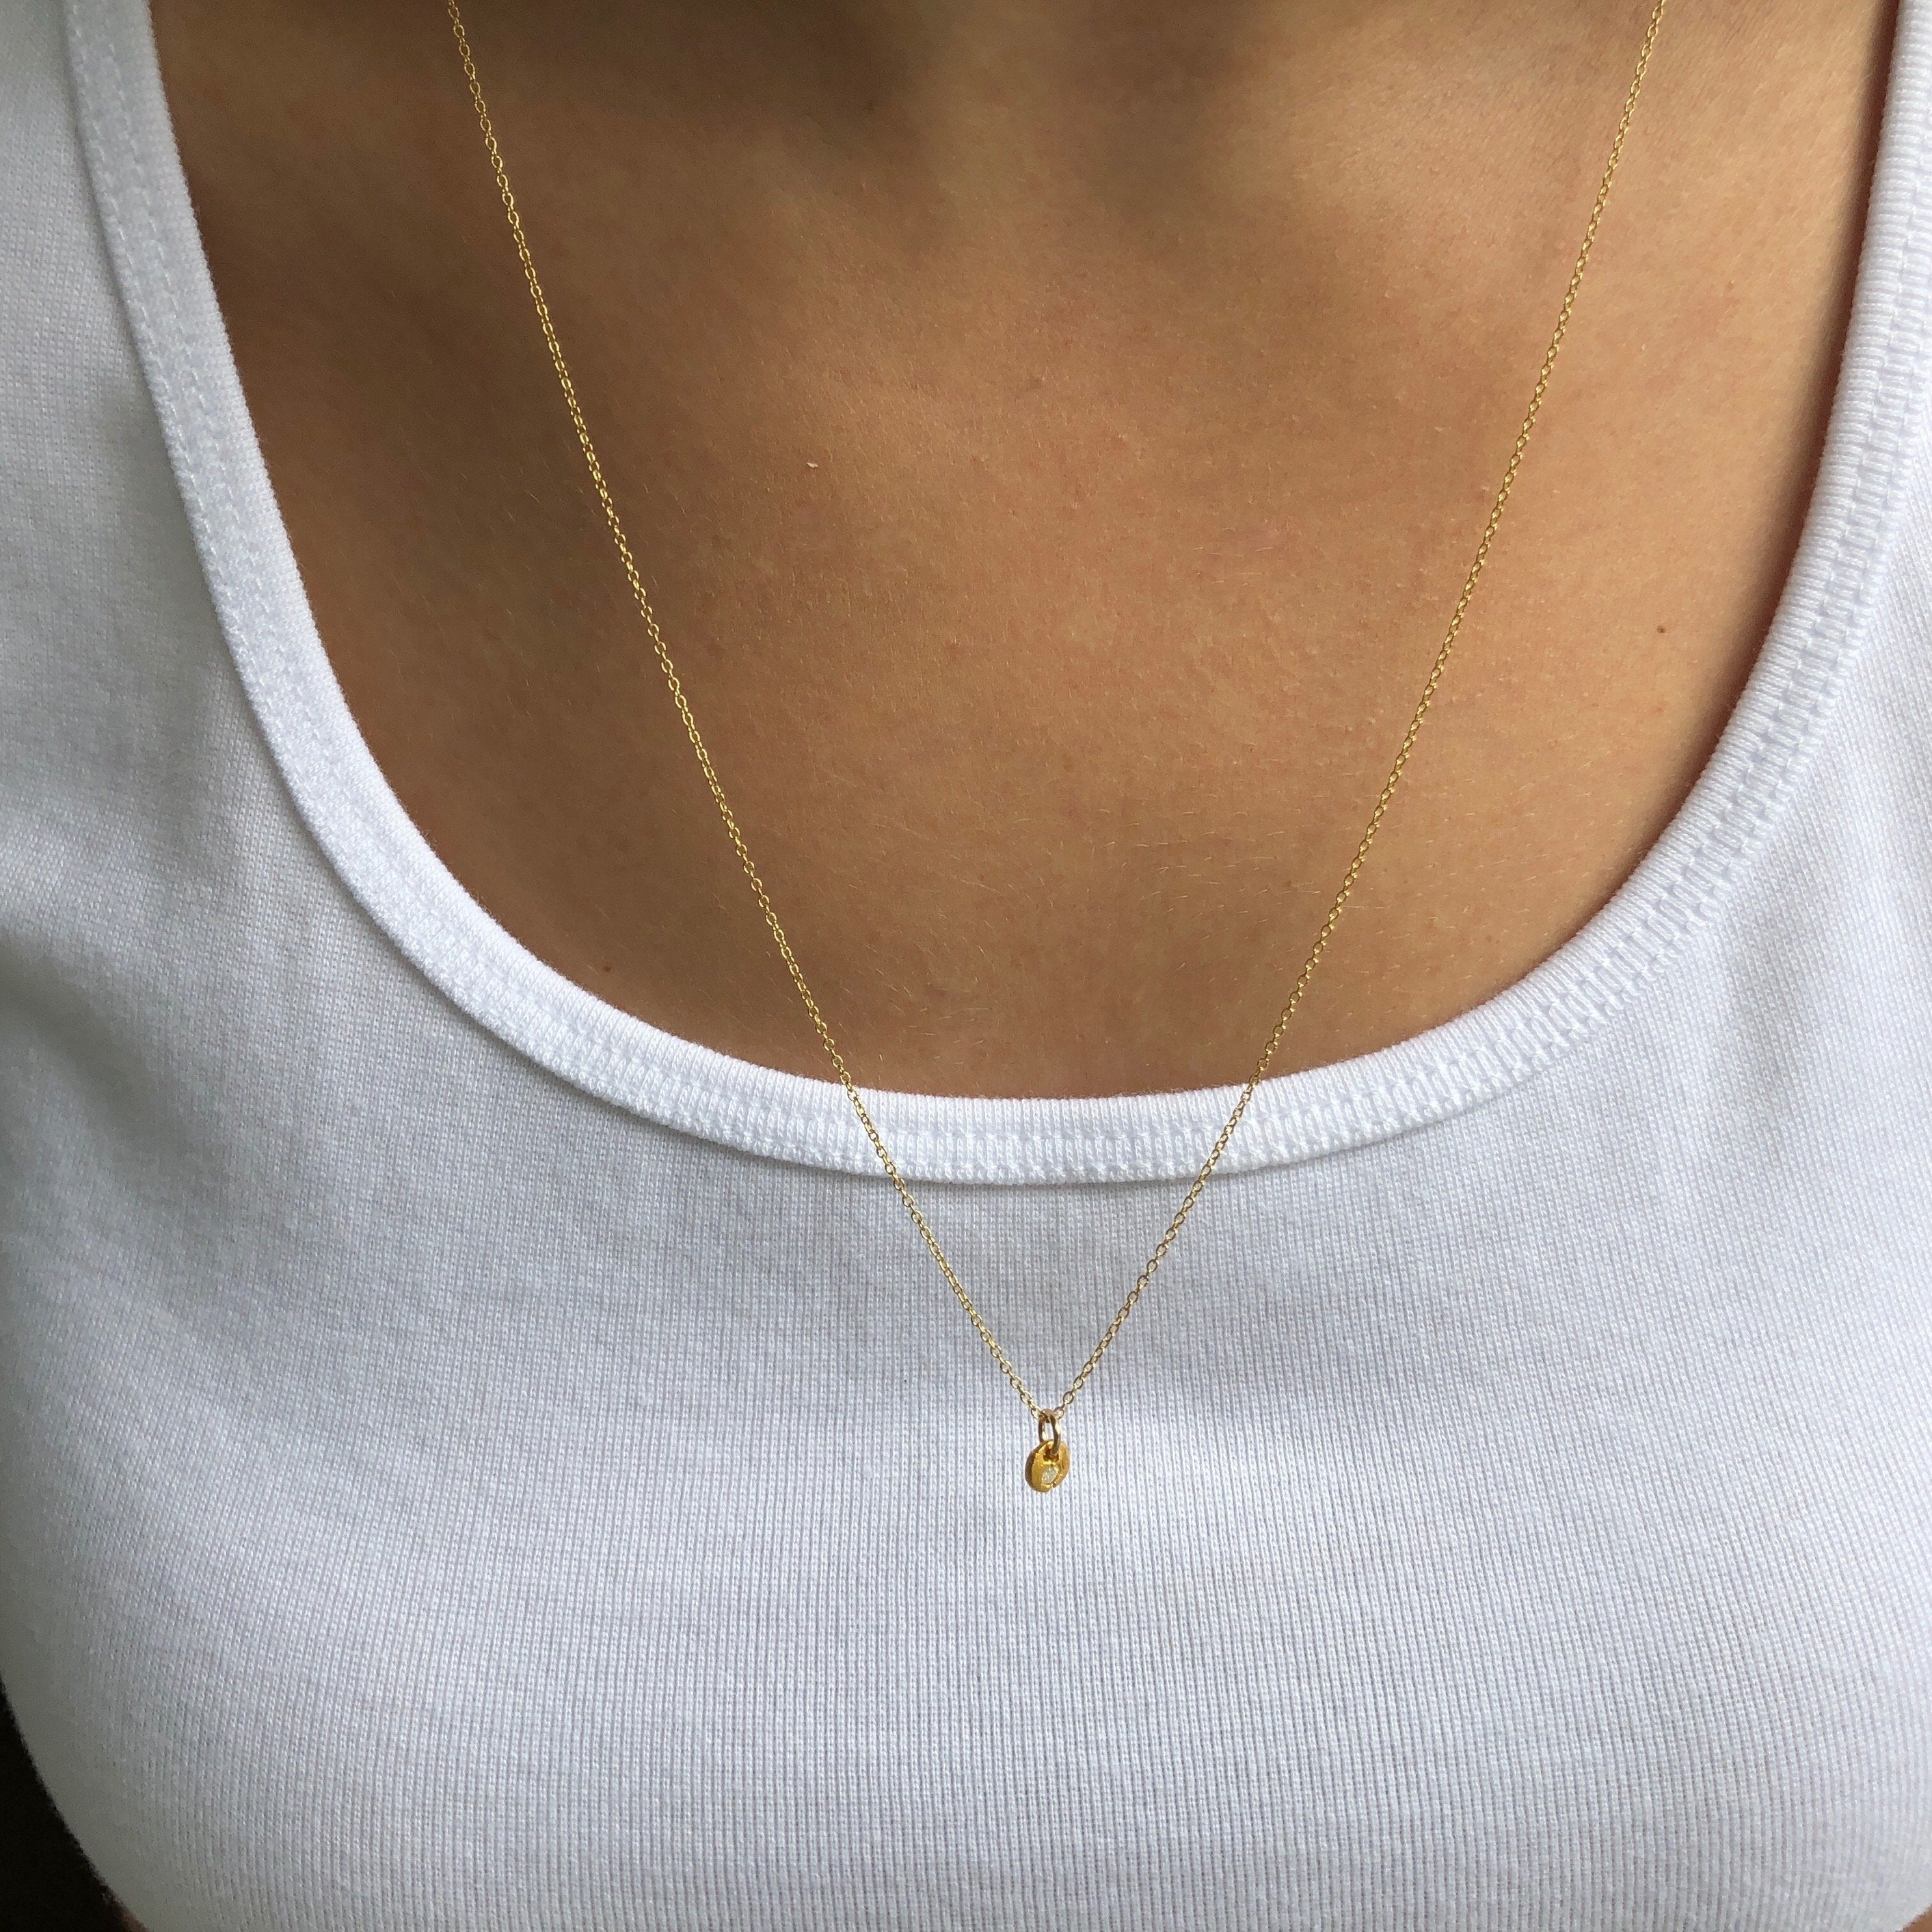 Little Lights Charm Necklace 18k Solid Gold - MAS Designs